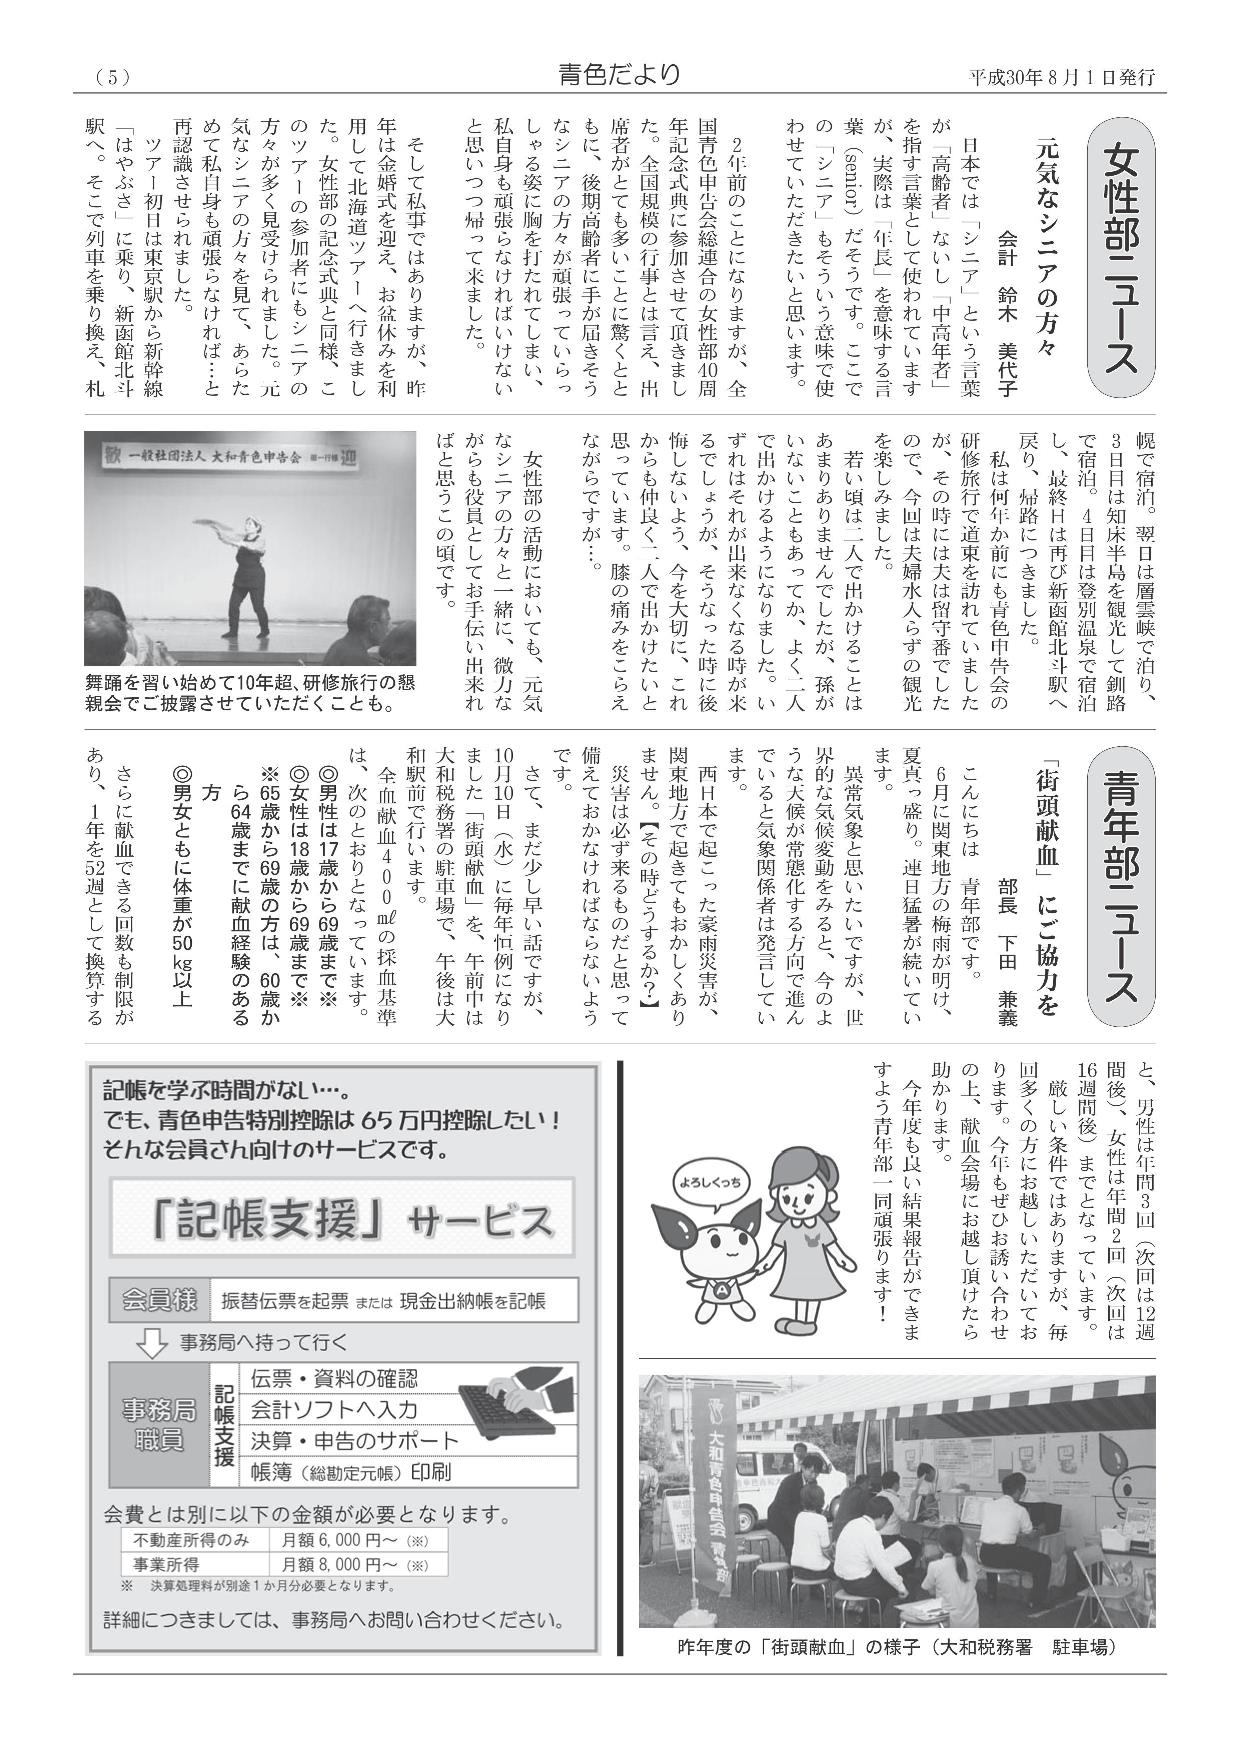 http://www.shokonet.or.jp/aoiro/yamato/news/dayori_130_05.jpg